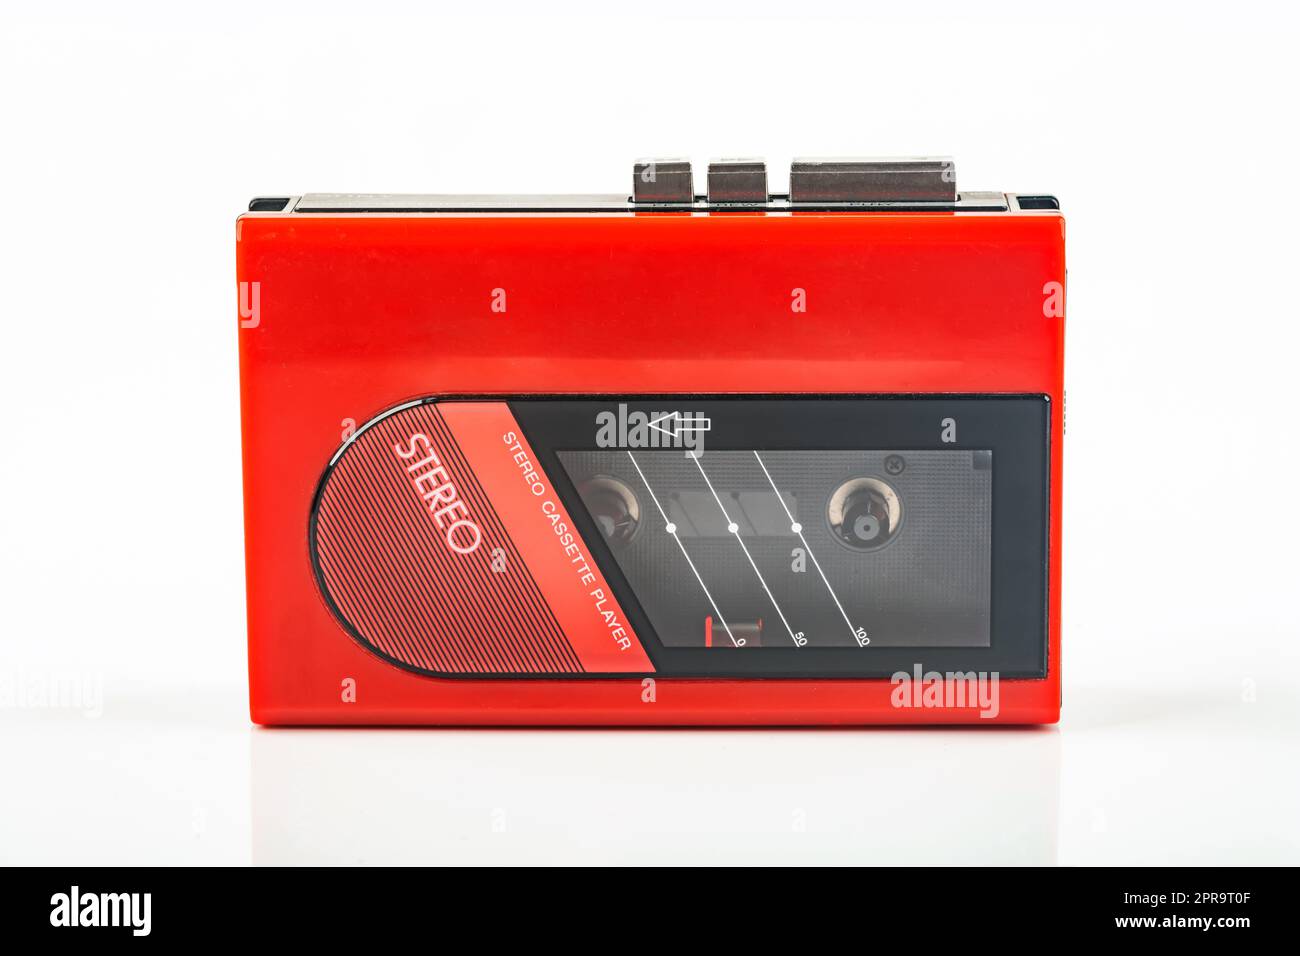 Analogue audio cassette player Stock Photo